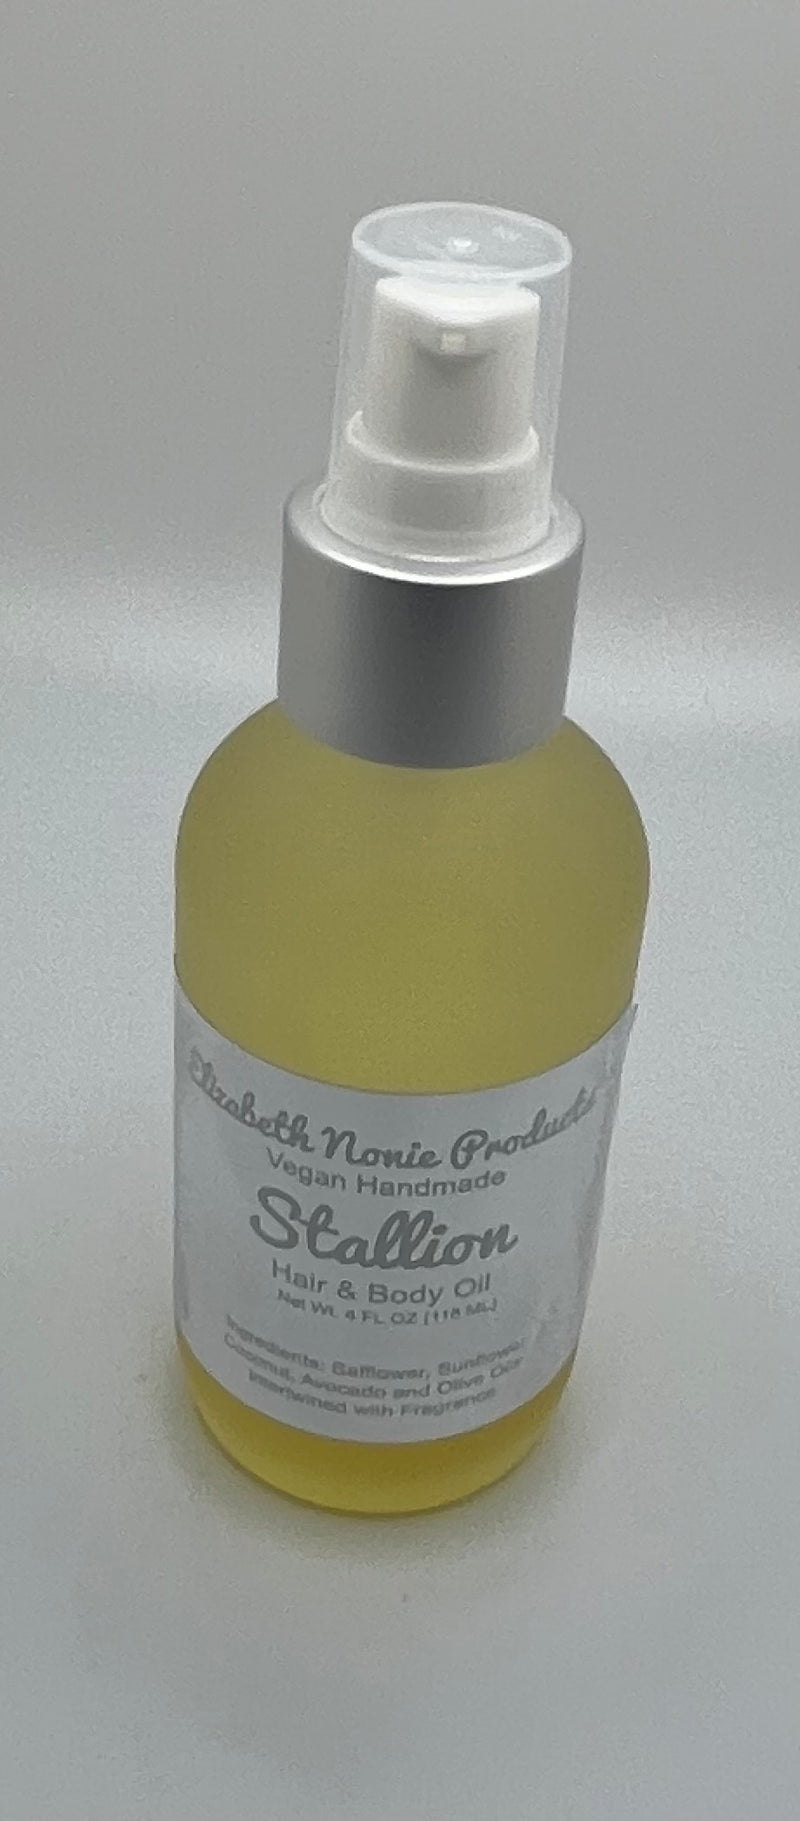 Stallion Hair and Body Oil